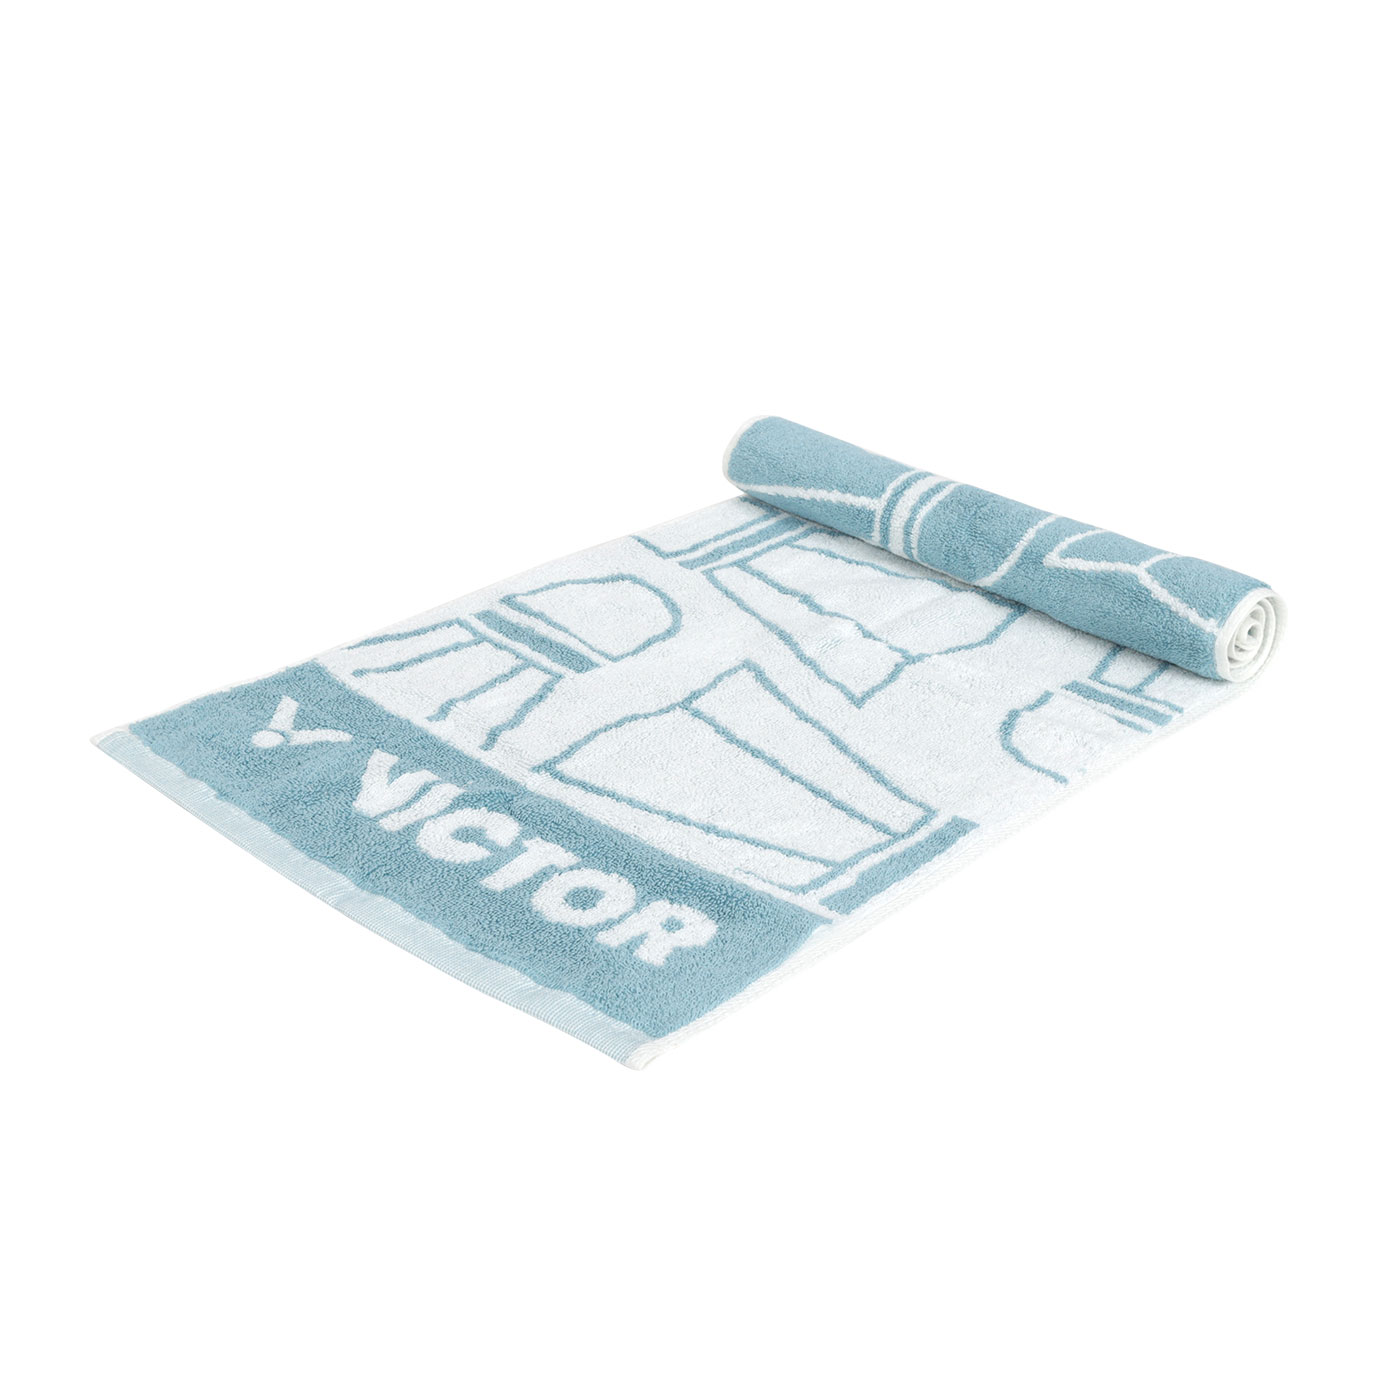 VICTOR 運動毛巾  C-4188F - 湖水藍白